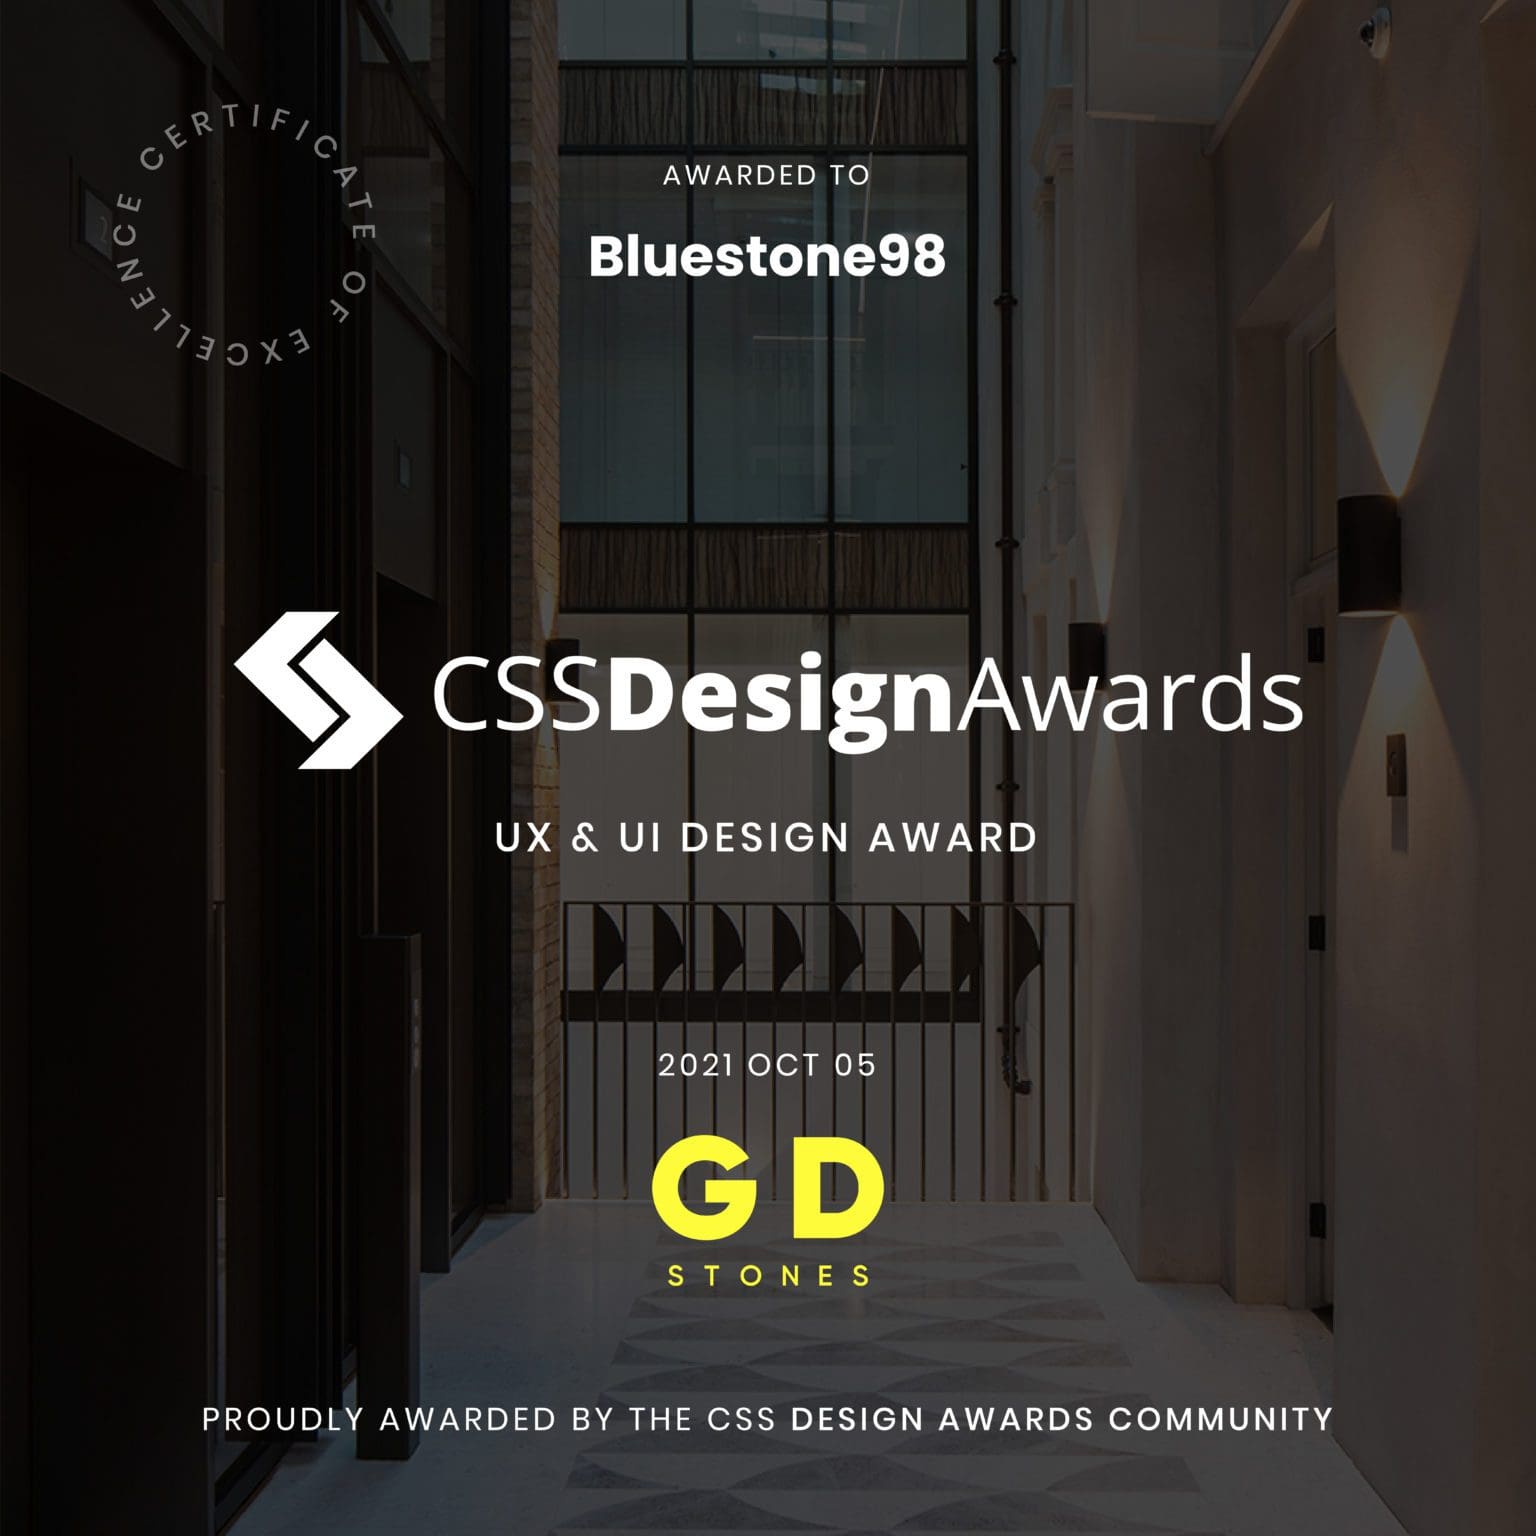 Ux & Ui Design Award Design by Bluestone98 for GD Stone